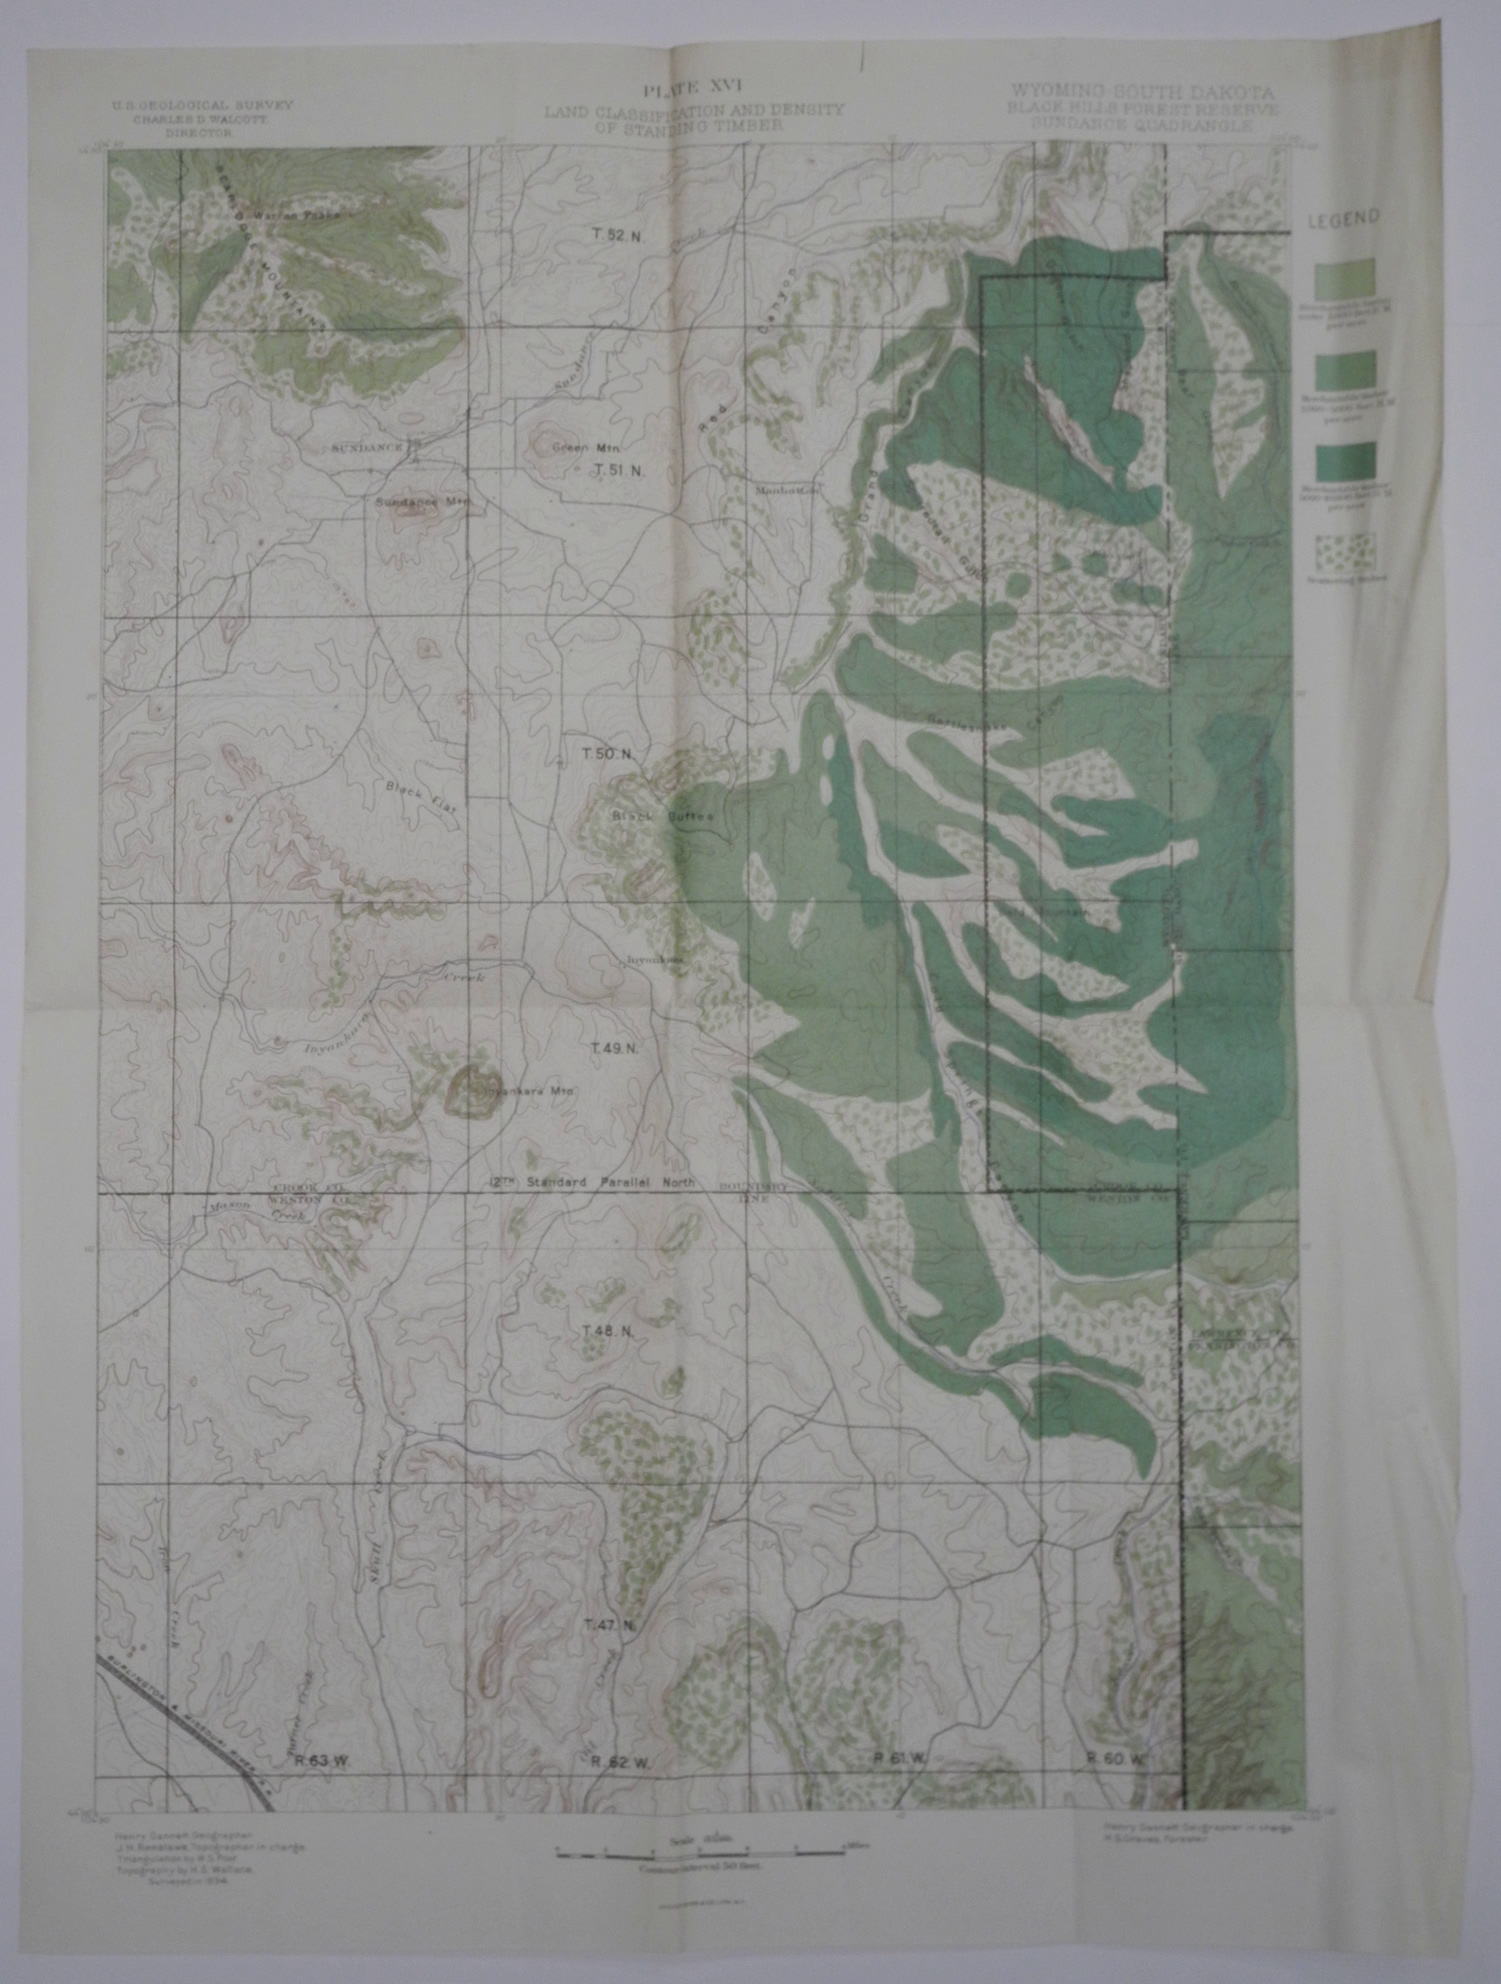 paper Rand-McNally state map: NORTH DAKOTA highway c.1997 SOUTH DAKOTA 